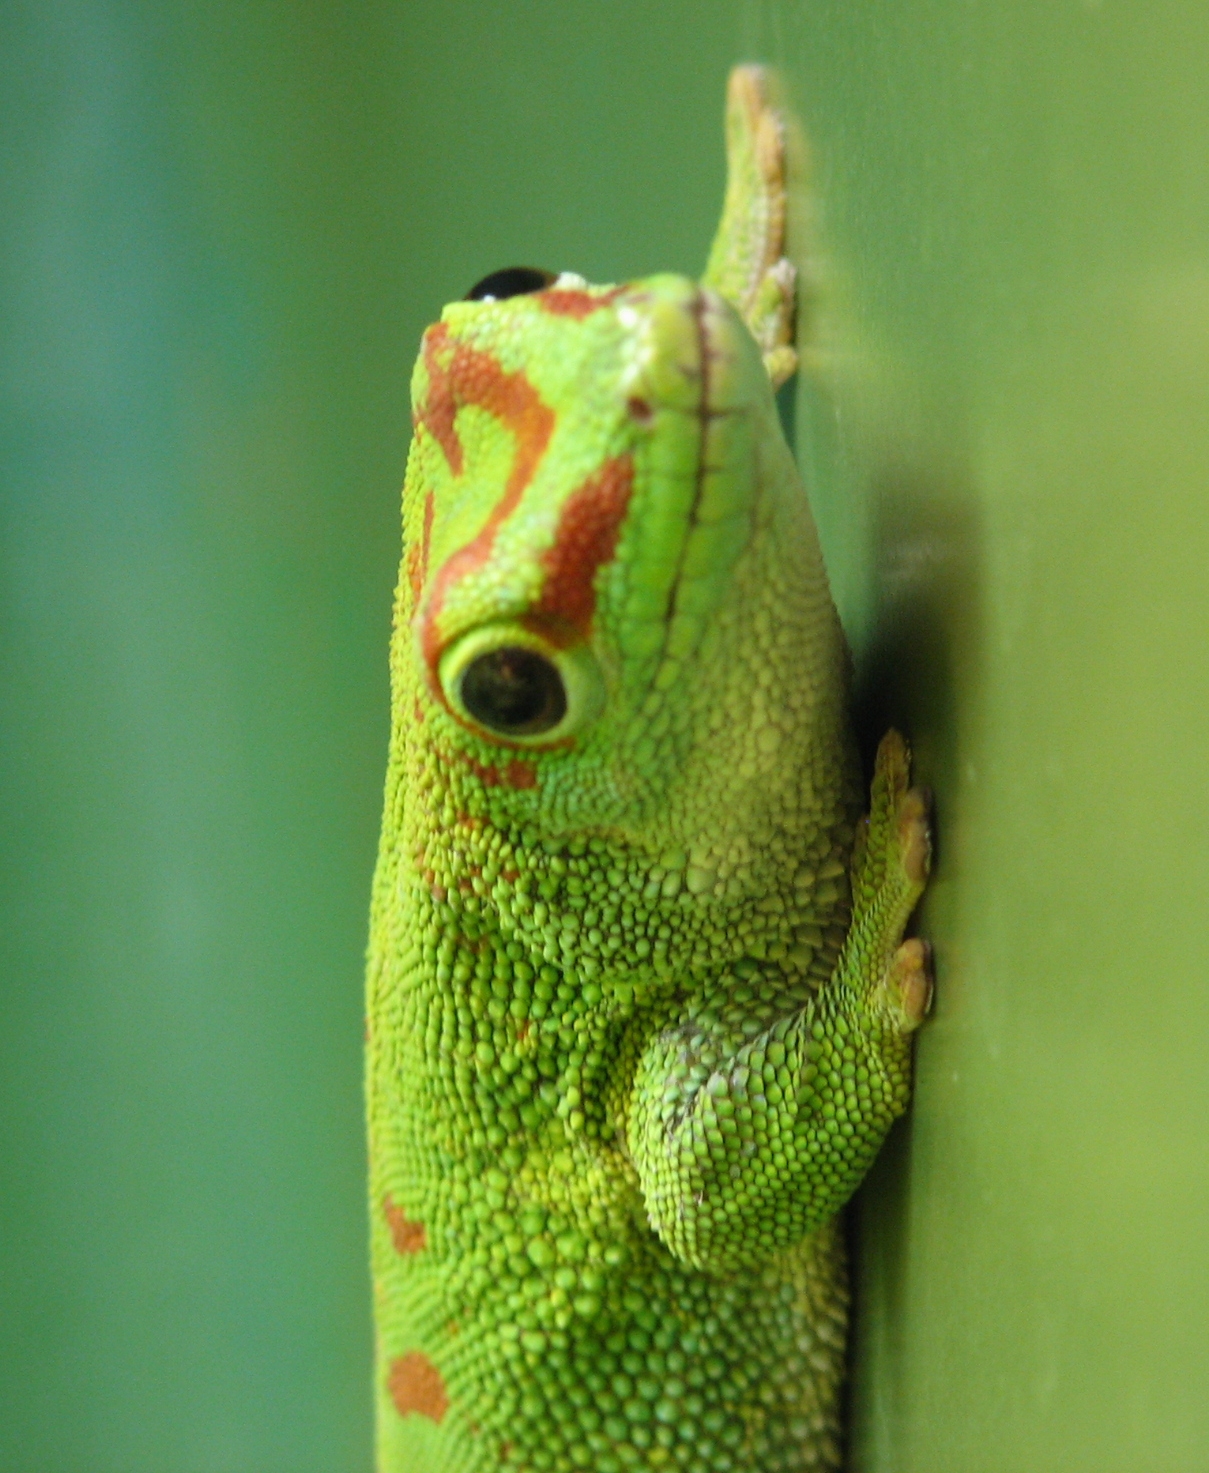 Madagascan_Giant_Day_Gecko_002.jpg